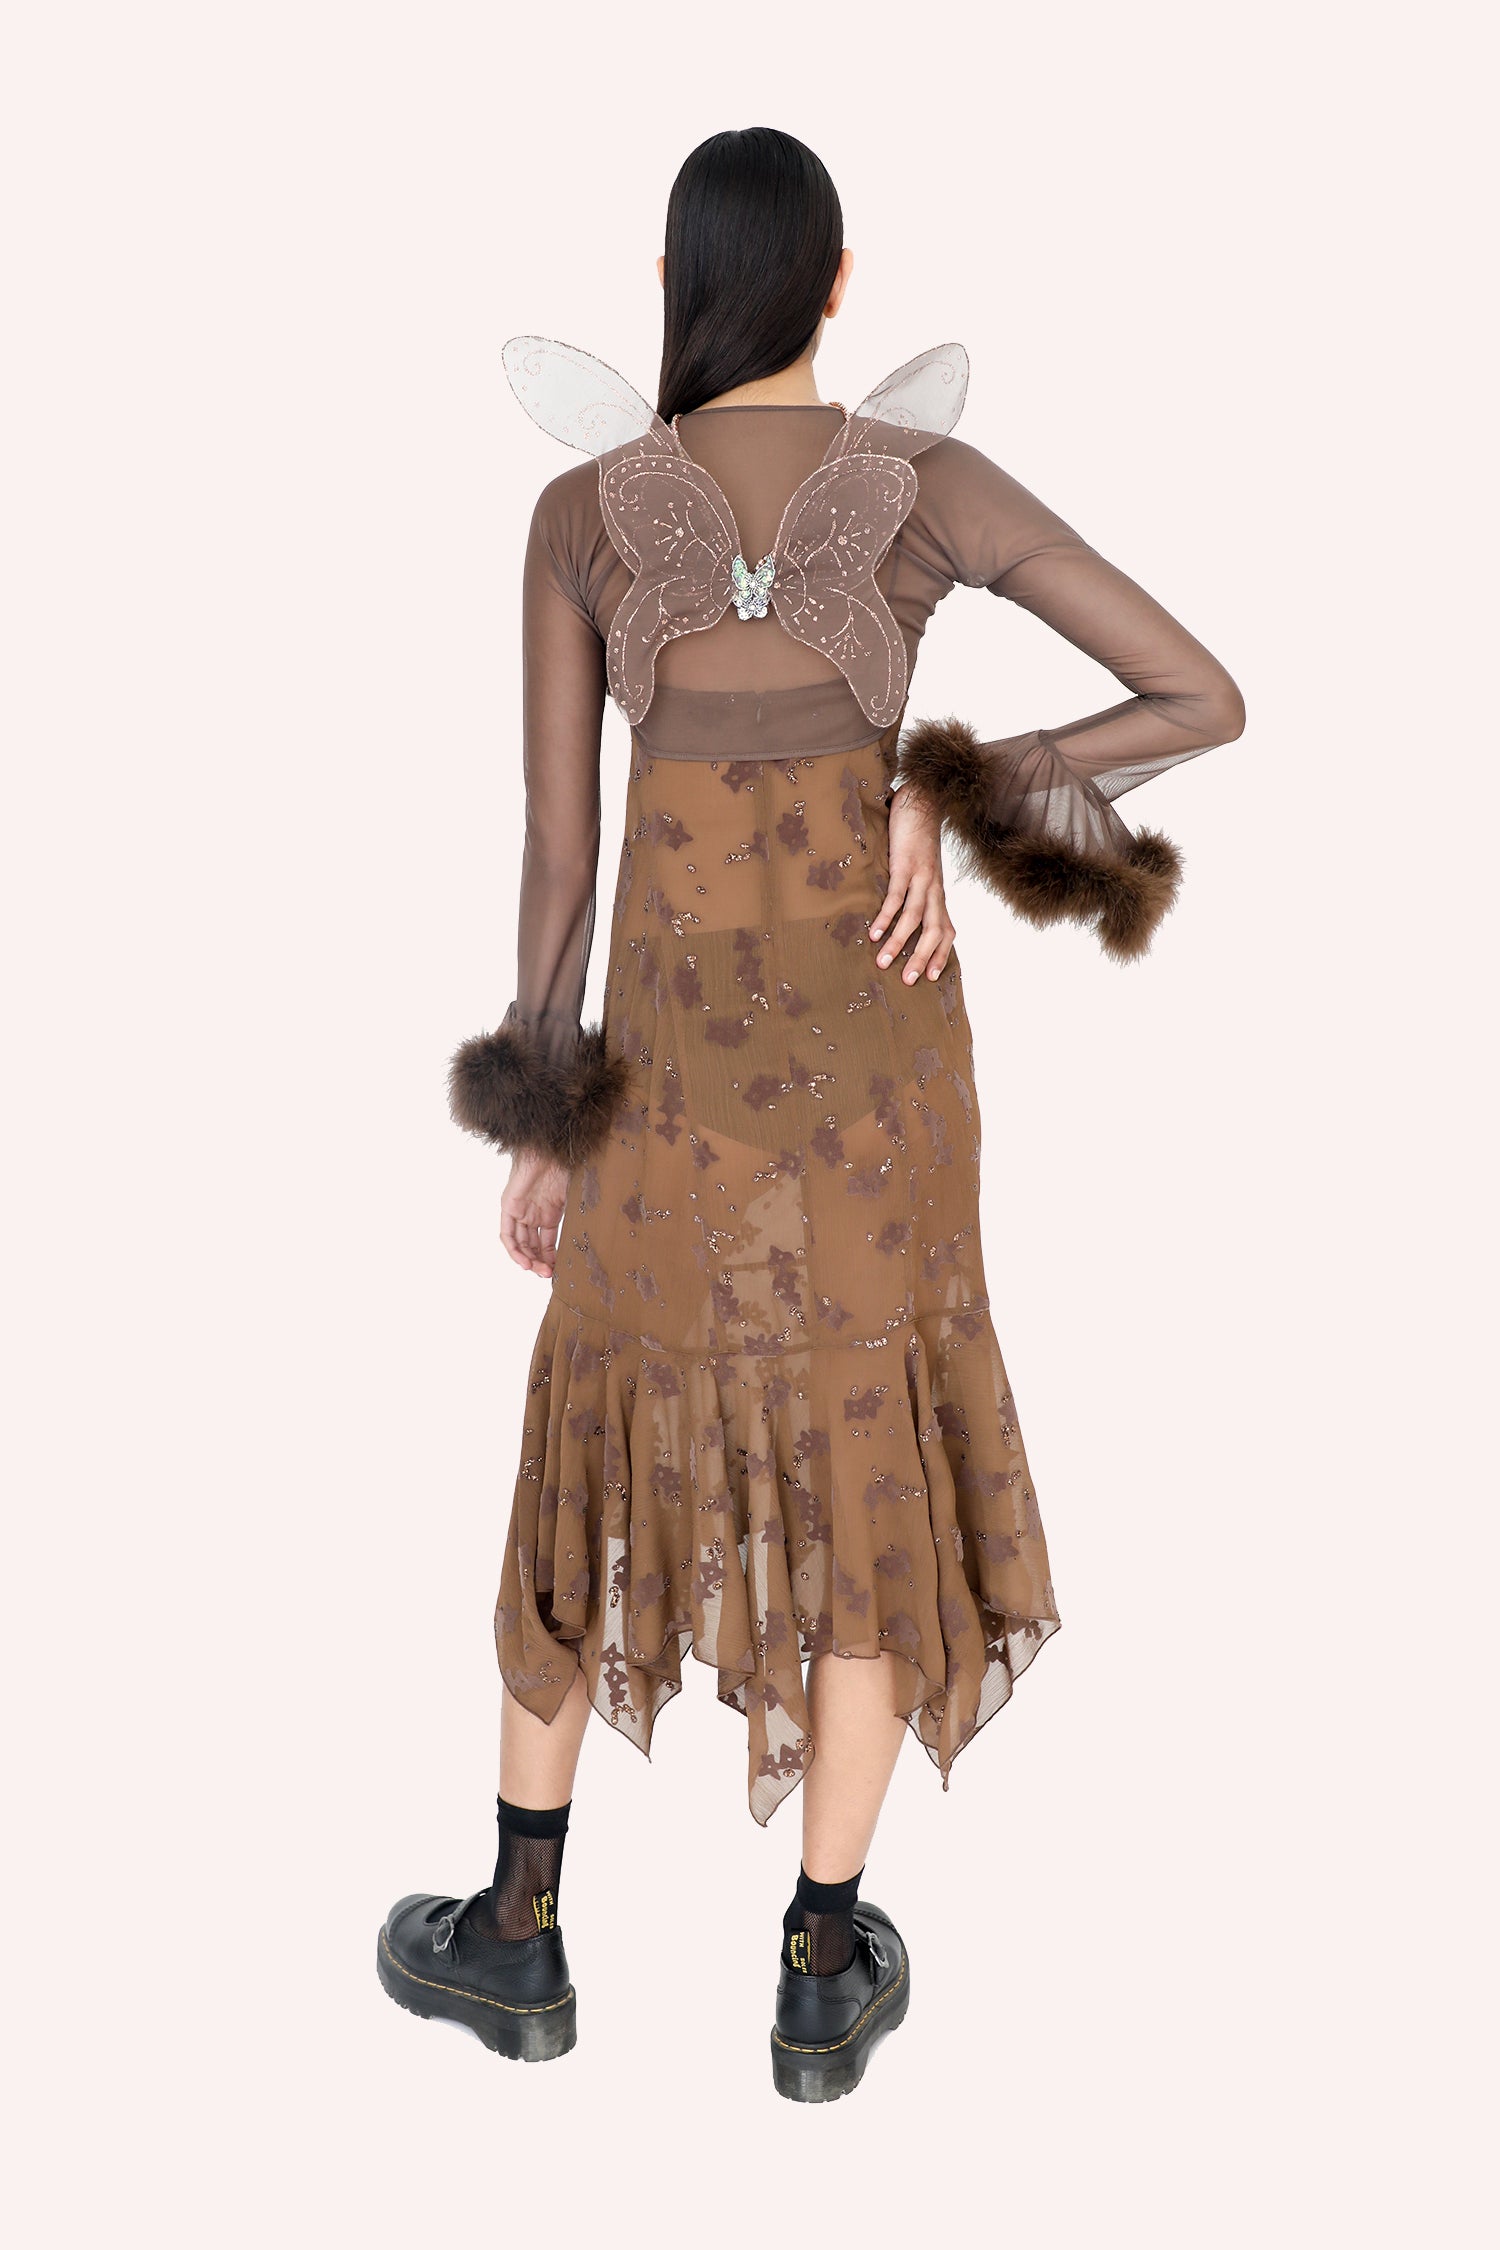 Cocoa Flock Crinkle Chiffon Dress, mid-calf long, sleeveless, ruffle effect at bottom